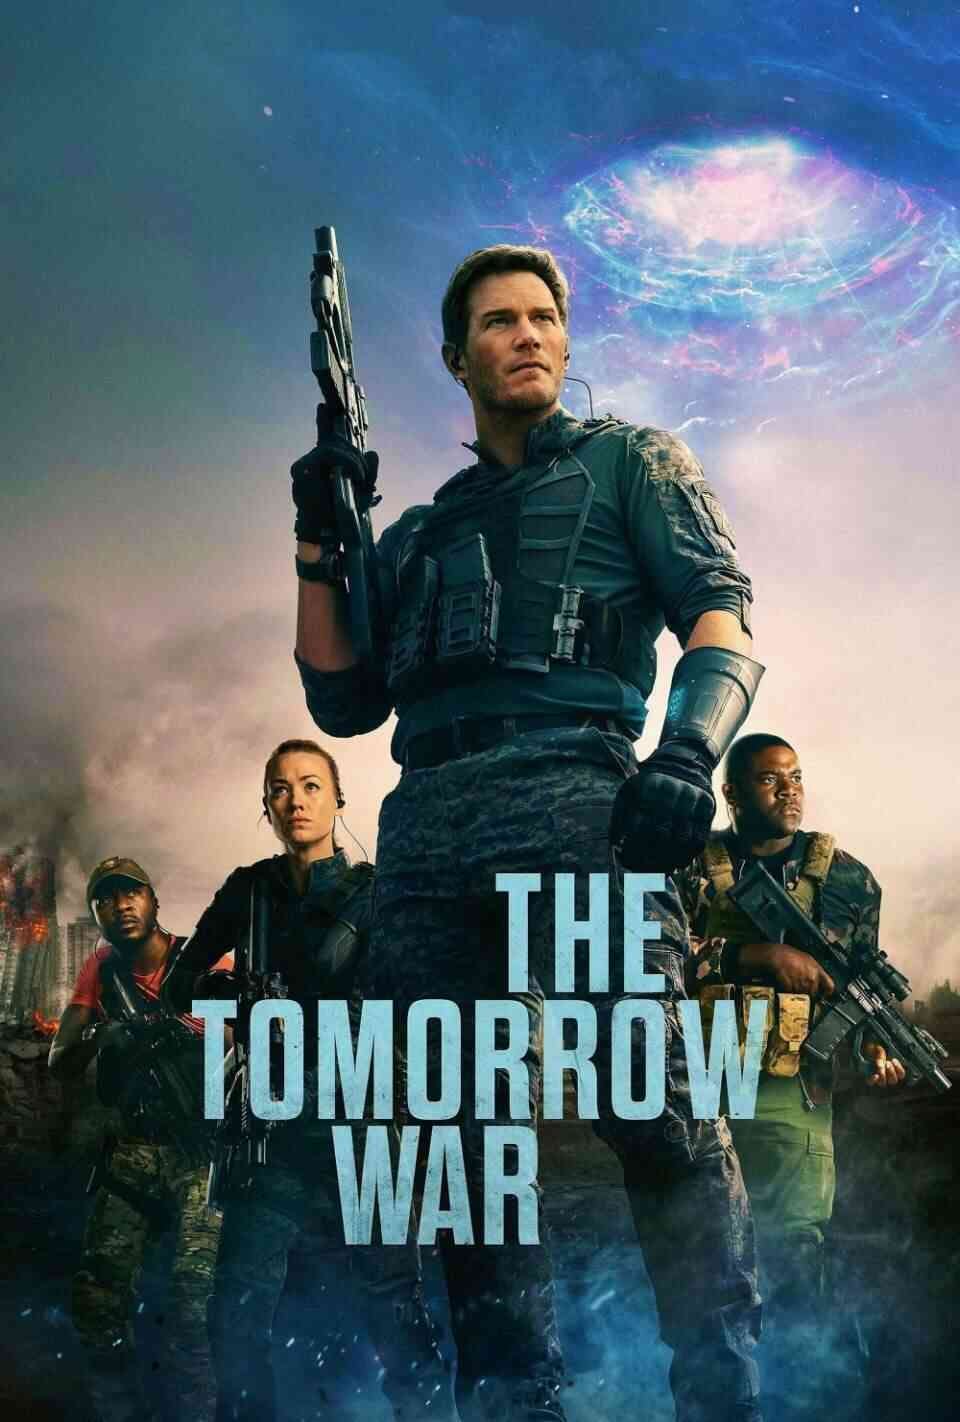 Read The Tomorrow War screenplay (poster)